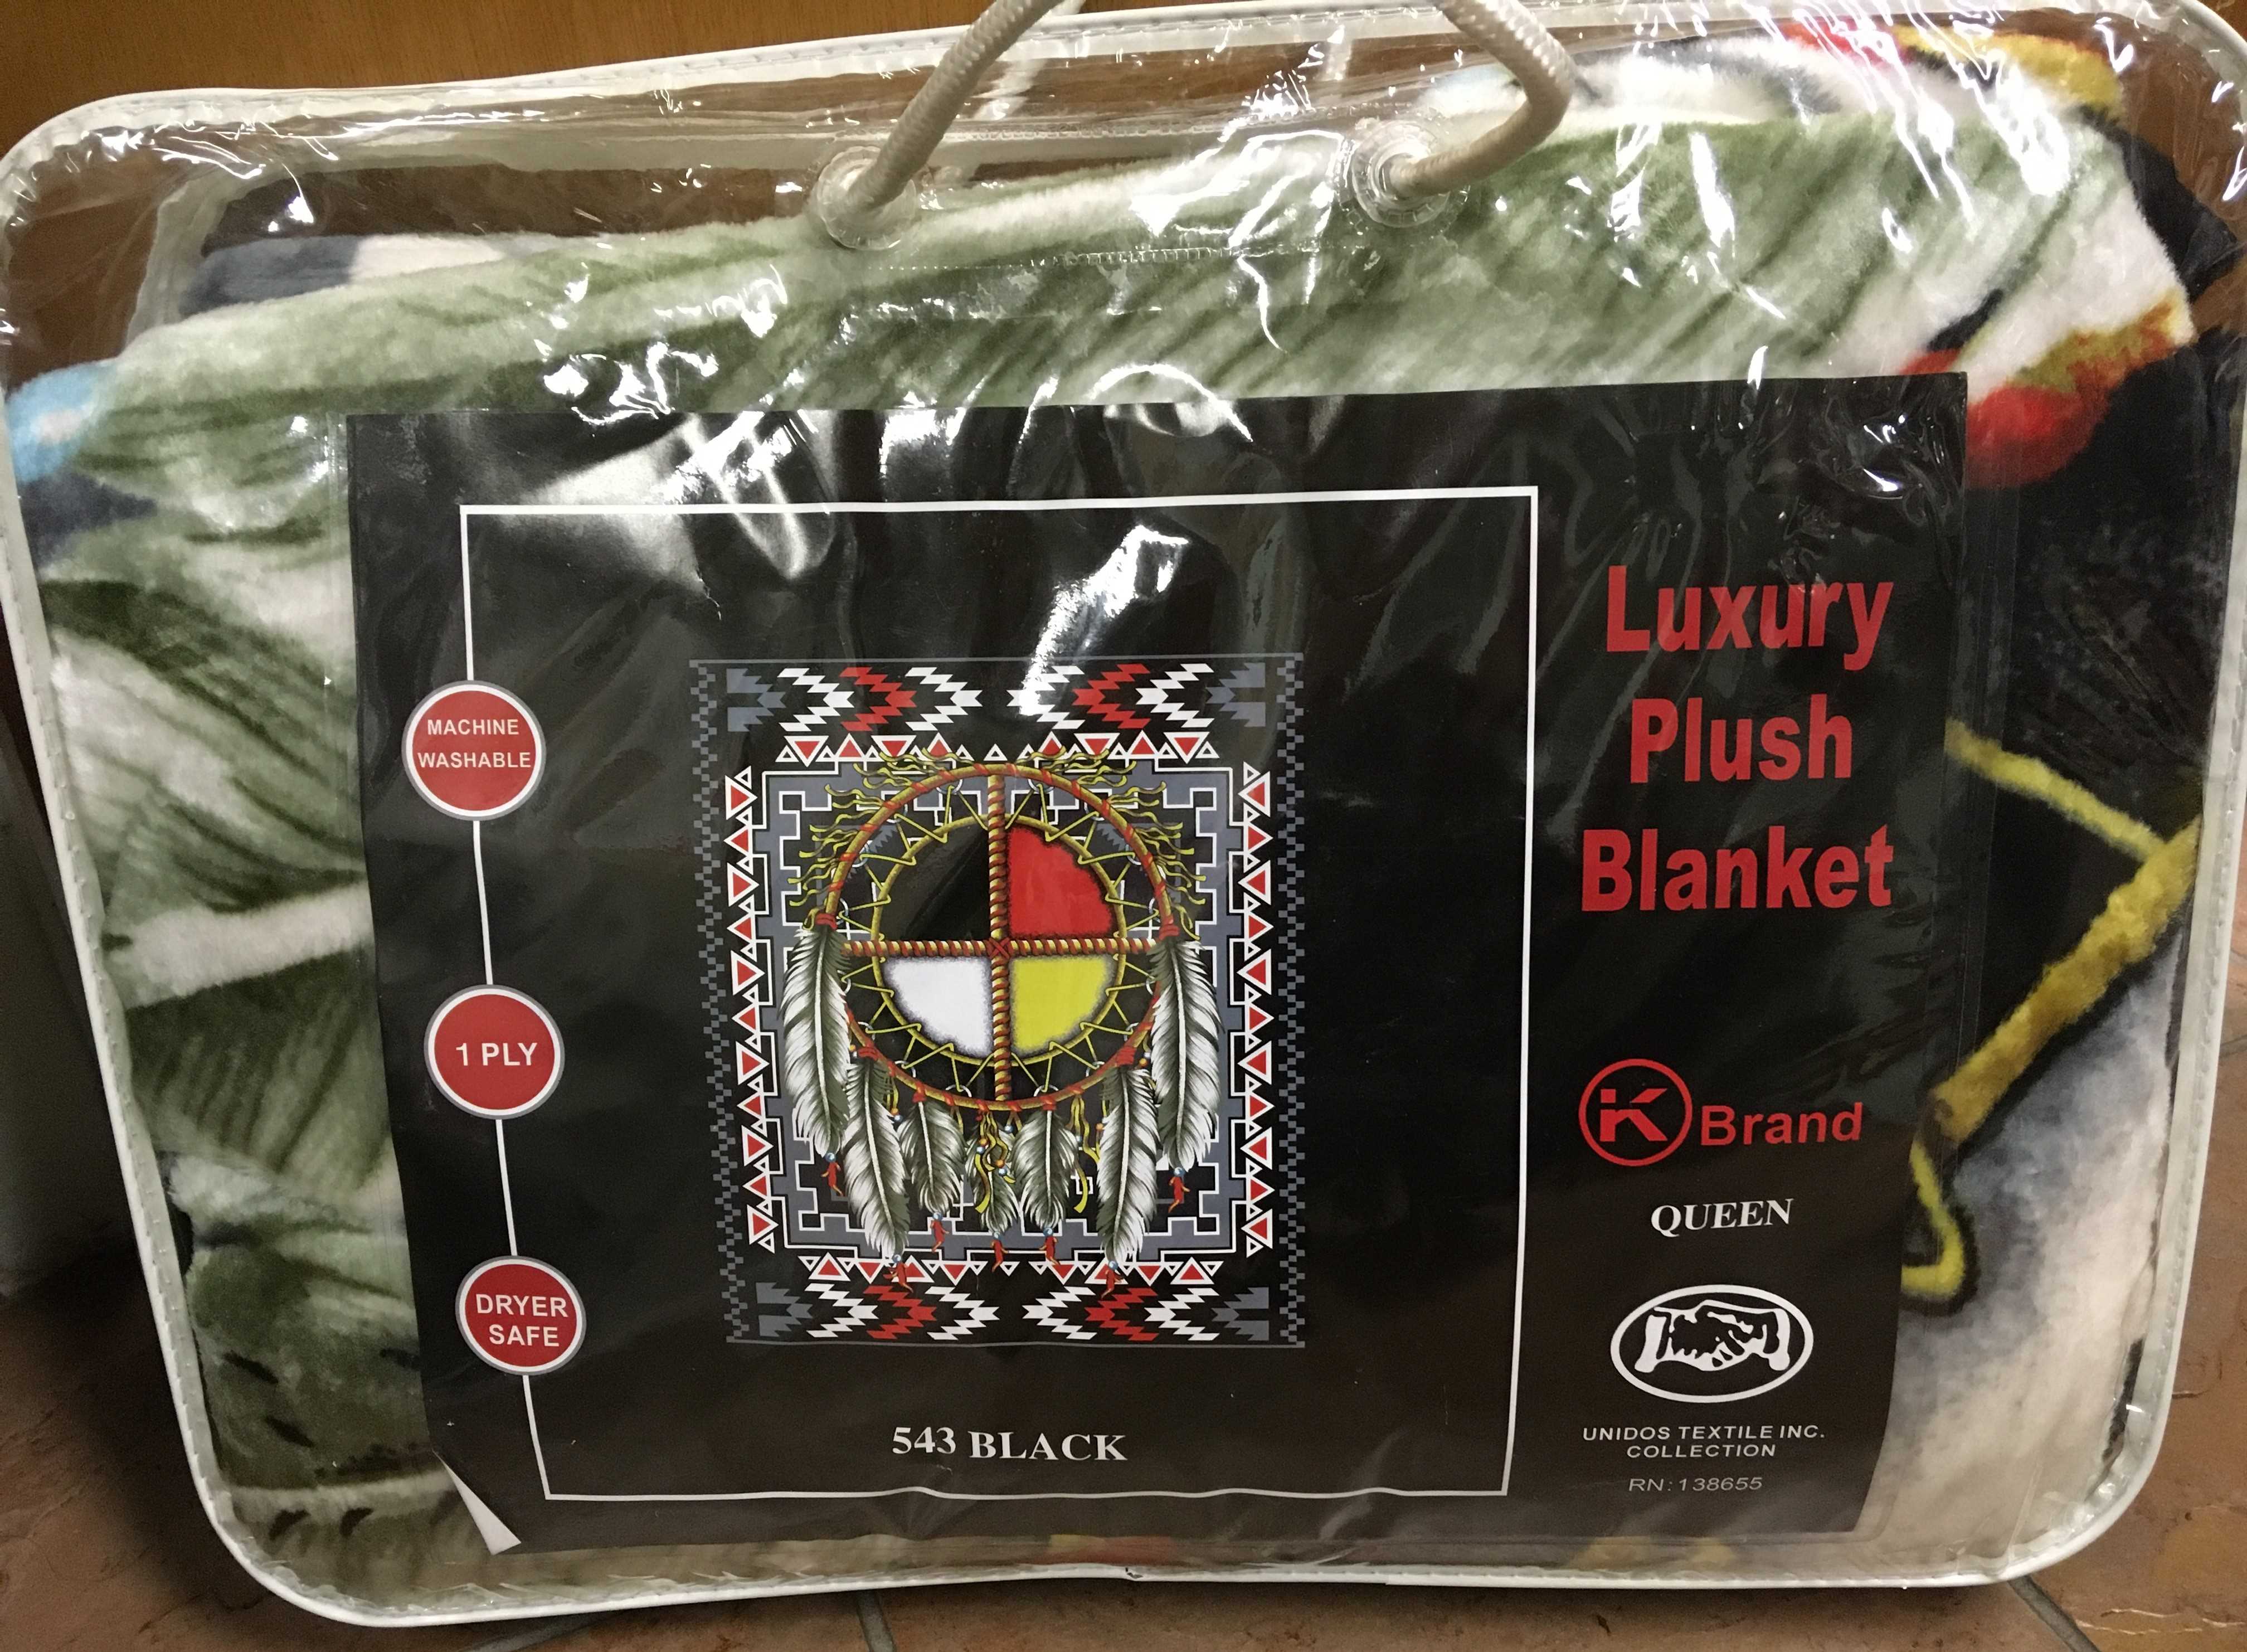 Plush blanket with Indigenous motif